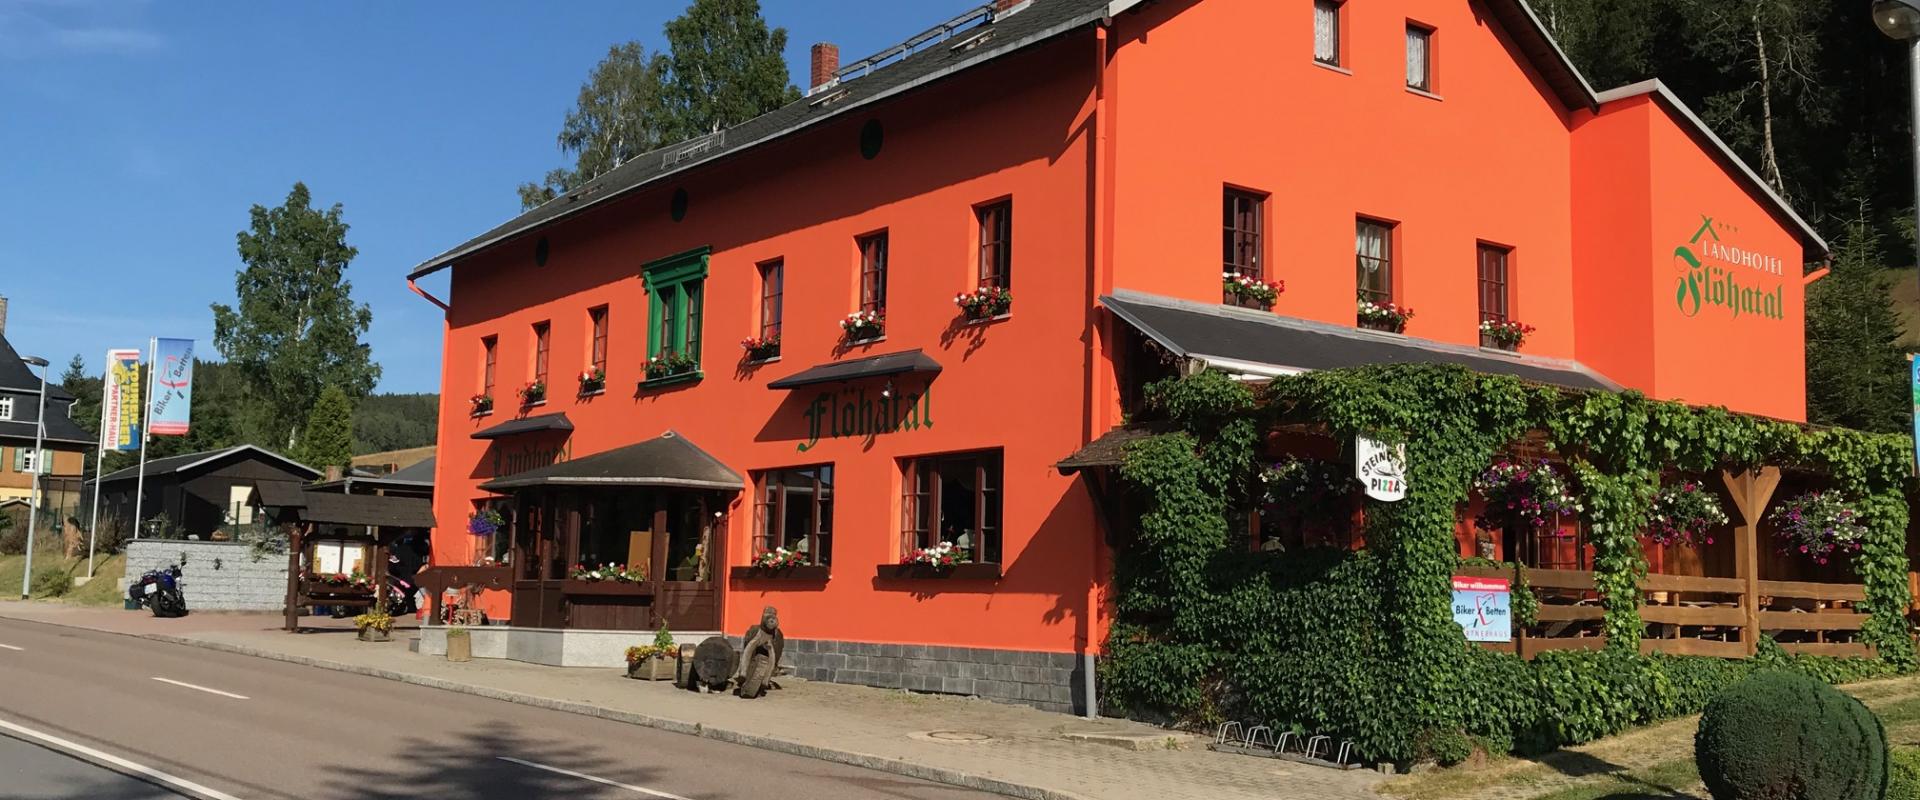 11808 Motorrad Hotel Flöhatal im Erzgebirge.jpg